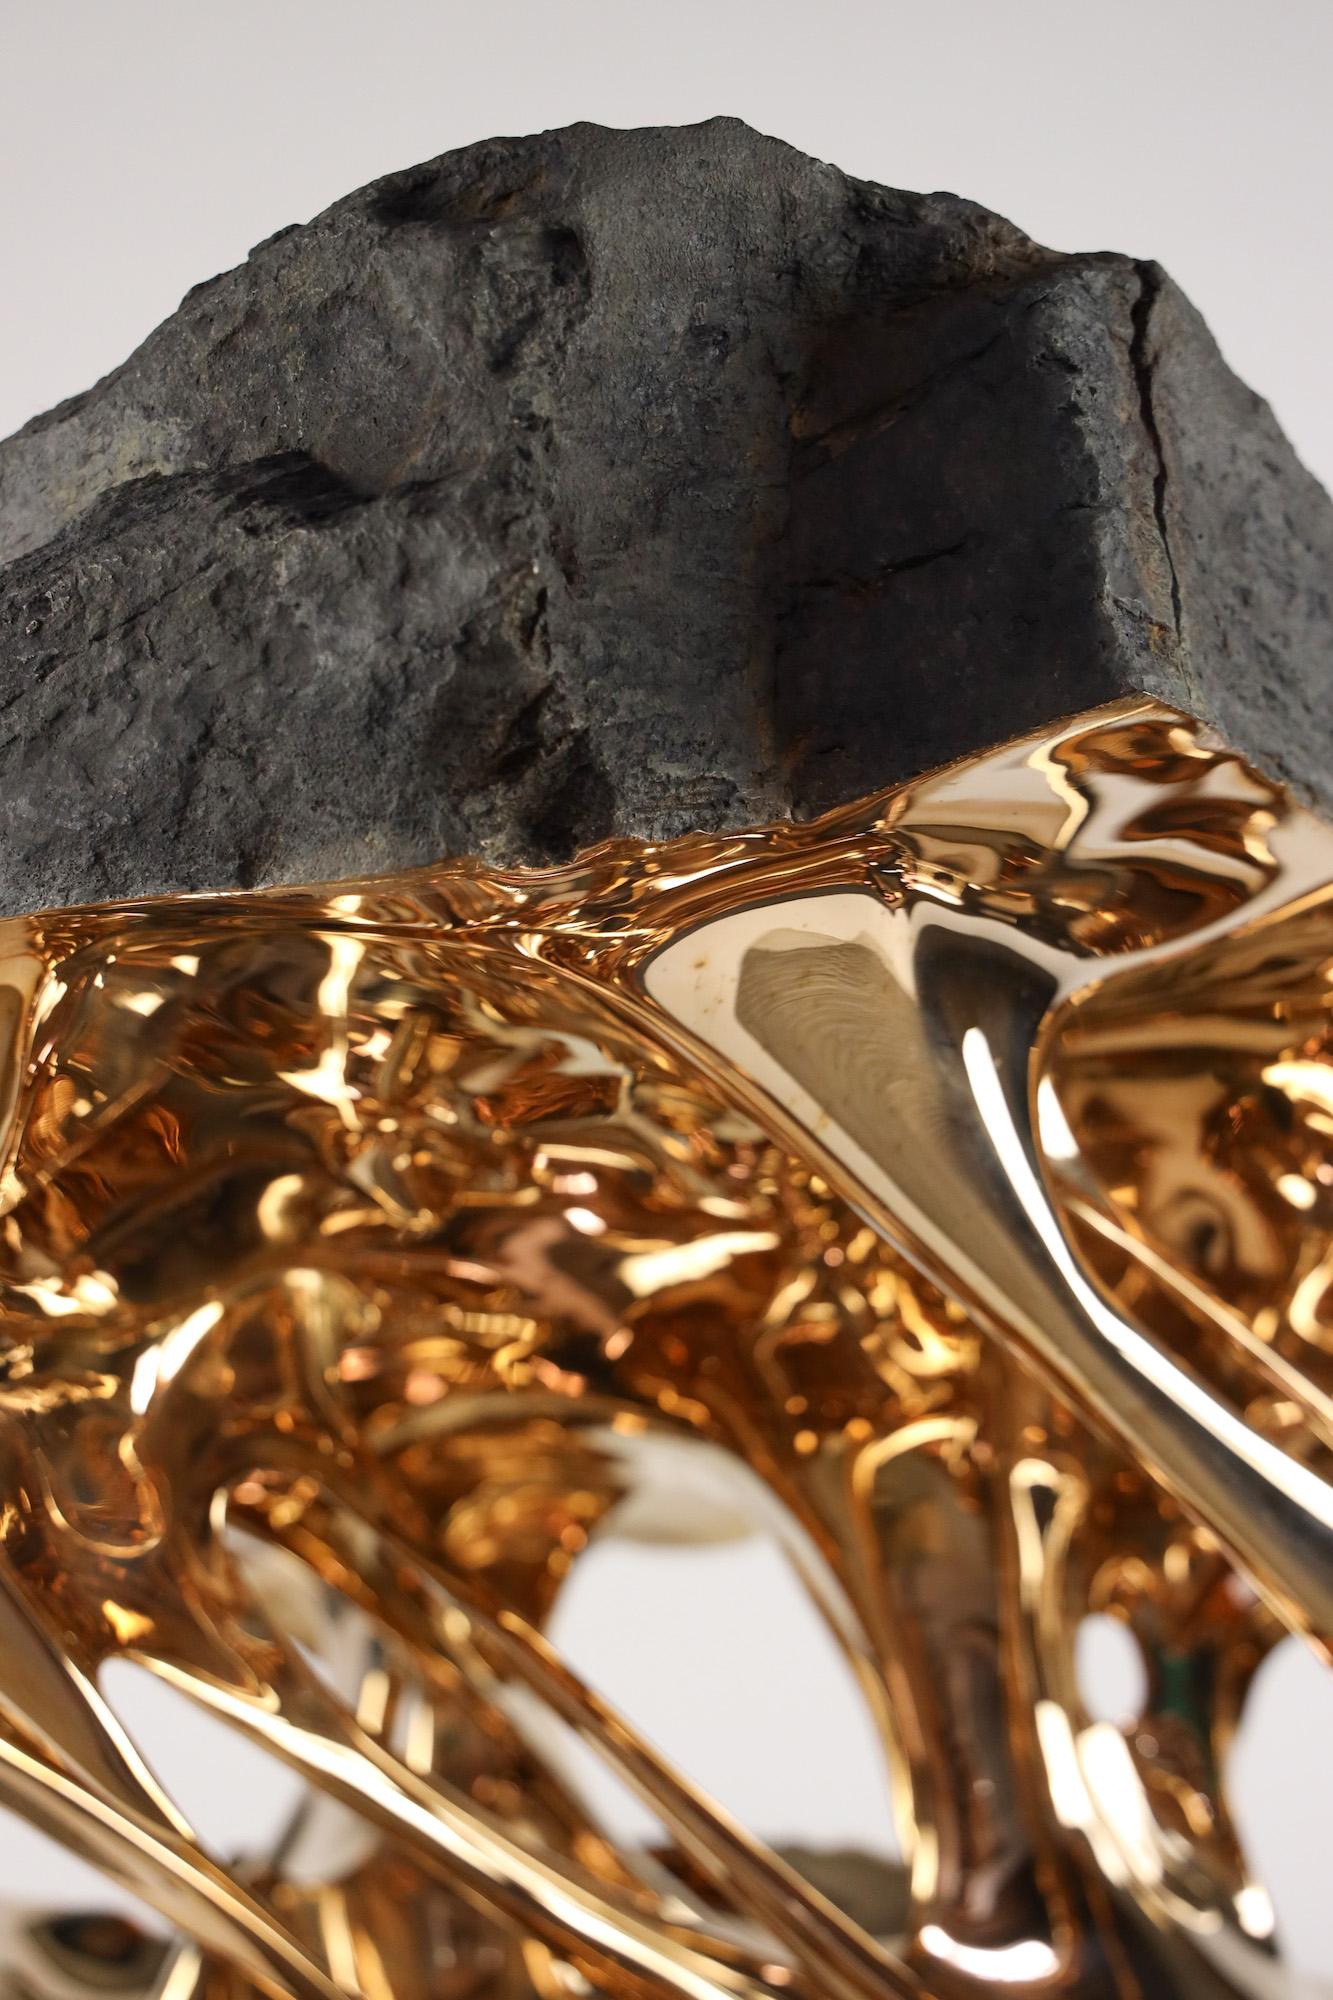 Gaïa by Romain Langlois - Rock-like bronze sculpture, golden, abstract For Sale 11